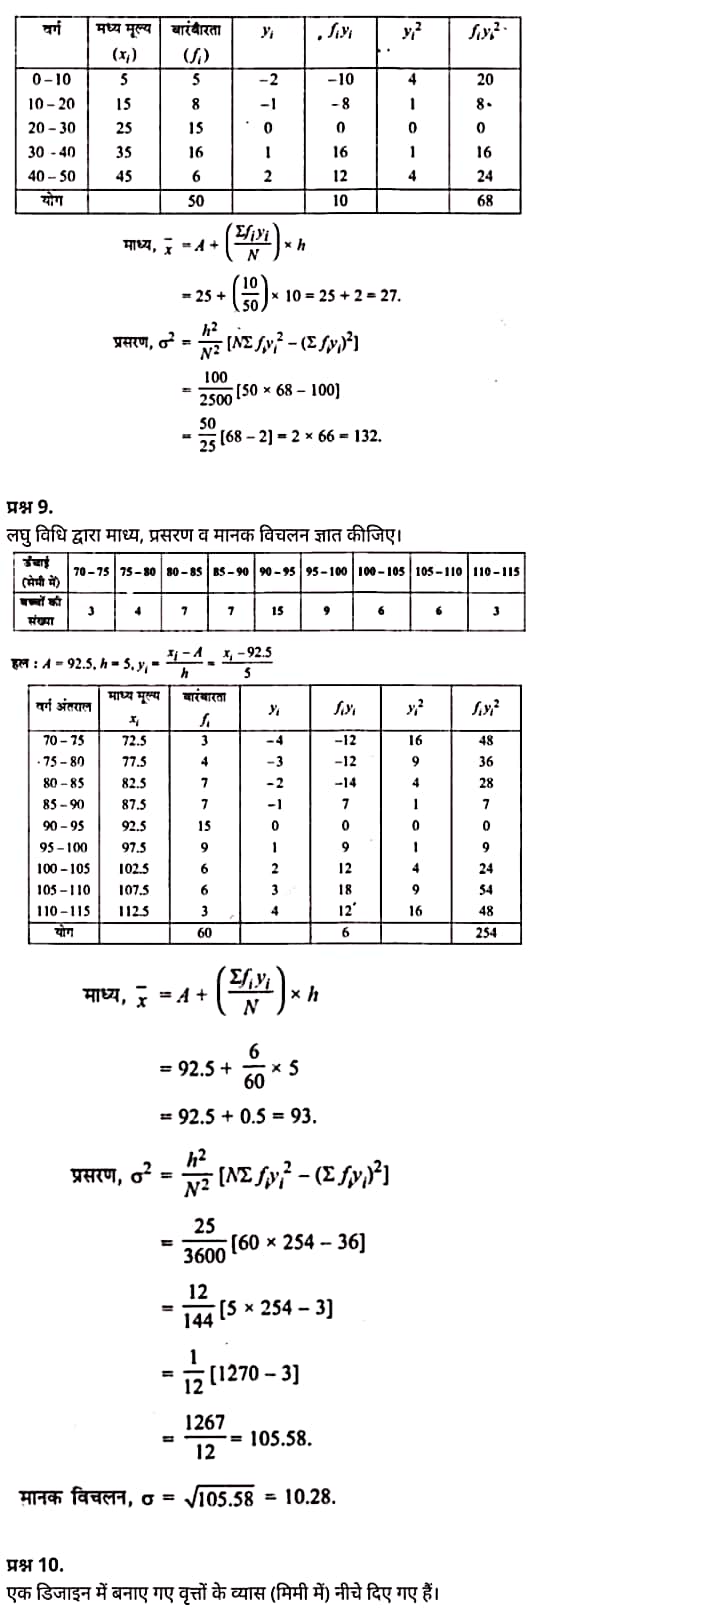 Statistics,   types of statistics,  statistics pdf,  statistics math,  statistics example,  statistics book,  importance of statistics,  statistics meaning in hindi,  descriptive statistics,   सांख्यिकी,  सांख्यिकी विभाग,  सांख्यिकी नोट्स PDF Download,  सांख्यिकी के सूत्र,  सांख्यिकी के महत्व,  सांख्यिकी की सीमाएं,  सांख्यिकी की विशेषताएं,  सांख्यिकी की उपयोगिता,  सांख्यिकी का उपयोग,   Class 11 matha Chapter 15,  class 11 matha chapter 15, ncert solutions in hindi,  class 11 matha chapter 15, notes in hindi,  class 11 matha chapter 15, question answer,  class 11 matha chapter 15, notes,  11 class matha chapter 15, in hindi,  class 11 matha chapter 15, in hindi,  class 11 matha chapter 15, important questions in hindi,  class 11 matha notes in hindi,   matha class 11 notes pdf,  matha Class 11 Notes 2021 NCERT,  matha Class 11 PDF,  matha book,  matha Quiz Class 11,  11th matha book up board,  up Board 11th matha Notes,  कक्षा 11 मैथ्स अध्याय 15,  कक्षा 11 मैथ्स का अध्याय 15, ncert solution in hindi,  कक्षा 11 मैथ्स के अध्याय 15, के नोट्स हिंदी में,  कक्षा 11 का मैथ्स अध्याय 15, का प्रश्न उत्तर,  कक्षा 11 मैथ्स अध्याय 15, के नोट्स,  11 कक्षा मैथ्स अध्याय 15, हिंदी में,  कक्षा 11 मैथ्स अध्याय 12, हिंदी में,  कक्षा 11 मैथ्स अध्याय 15, महत्वपूर्ण प्रश्न हिंदी में,  कक्षा 11 के मैथ्स के नोट्स हिंदी में,  मैथ्स कक्षा 11 नोट्स pdf,  मैथ्स कक्षा 11 नोट्स 2021 NCERT,  मैथ्स कक्षा 11 PDF,  मैथ्स पुस्तक,  मैथ्स की बुक,  मैथ्स प्रश्नोत्तरी Class 11, 11 वीं मैथ्स पुस्तक up board,  बिहार बोर्ड 11 वीं मैथ्स नोट्स,   कक्षा 11 गणित अध्याय 15,  कक्षा 11 गणित का अध्याय 15, ncert solution in hindi,  कक्षा 11 गणित के अध्याय 15, के नोट्स हिंदी में,  कक्षा 11 का गणित अध्याय 15, का प्रश्न उत्तर,  कक्षा 11 गणित अध्याय 15, के नोट्स,  11 कक्षा गणित अध्याय 15, हिंदी में,  कक्षा 11 गणित अध्याय 15, हिंदी में,  कक्षा 11 गणित अध्याय 15, महत्वपूर्ण प्रश्न हिंदी में,  कक्षा 11 के गणित के नोट्स हिंदी में, गणित कक्षा 11 नोट्स pdf,   गणित कक्षा 11 नोट्स 2021 NCERT,  गणित कक्षा 11 PDF,  गणित पुस्तक,  गणित की बुक,  गणित प्रश्नोत्तरी Class 11, 11 वीं गणित पुस्तक up board,     11th matha book in hindi, 11th matha notes in hindi, cbse books for class 11, cbse books in hindi, cbse ncert books, class 11 matha notes in hindi,  class 11 hindi ncert solutions, matha 2020, matha 2021, matha 2022, matha book class 11, matha book in hindi, matha class 11 in hindi, matha notes for class 11 up board in hindi, ncert all books, ncert app in hindi, ncert book solution, ncert books class 10, ncert books class 11, ncert books for class 7, ncert books for upsc in hindi, ncert books in hindi class 10, ncert books in hindi for class 11 matha, ncert books in hindi for class 6, ncert books in hindi pdf, ncert class 11 hindi book, ncert english book, ncert matha book in hindi, ncert matha books in hindi pdf, ncert matha class 11, ncert in hindi,  old ncert books in hindi, online ncert books in hindi,  up board 11th, up board 11th syllabus, up board class 10 hindi book, up board class 11 books, up board class 11 new syllabus, up board intermediate matha syllabus, up board intermediate syllabus 2021, Up board Master 2021, up board model paper 2021, up board model paper all subject, up board new syllabus of class 11th matha,   11 वीं मैथ्स पुस्तक हिंदी में, 11 वीं मैथ्स नोट्स हिंदी में, कक्षा 11 के लिए सीबीएससी पुस्तकें, कक्षा 11 मैथ्स नोट्स हिंदी में, कक्षा 11 हिंदी एनसीईआरटी समाधान,  मैथ्स बुक इन हिंदी, मैथ्स क्लास 11 हिंदी में,  एनसीईआरटी मैथ्स की किताब हिंदी में,  बोर्ड 11 वीं तक, 11 वीं तक की पाठ्यक्रम, बोर्ड कक्षा 10 की हिंदी पुस्तक , बोर्ड की कक्षा 11 की किताबें,   बोर्ड की कक्षा 11 की नई पाठ्यक्रम, बोर्ड मैथ्स 2020, यूपी   बोर्ड मैथ्स 2021, यूपी  बोर्ड मैथ्स 2022, यूपी  बोर्ड मैथ्स 2023, यूपी  बोर्ड इंटरमीडिएट मैथ्स सिलेबस, यूपी  बोर्ड इंटरमीडिएट सिलेबस 2021, यूपी  बोर्ड मास्टर 2021, यूपी  बोर्ड मॉडल पेपर 2021, यूपी  मॉडल पेपर सभी विषय, यूपी  बोर्ड न्यू क्लास का सिलेबस  11 वीं मैथ्स, अप बोर्ड पेपर 2021, यूपी बोर्ड सिलेबस 2021, यूपी बोर्ड सिलेबस 2022,